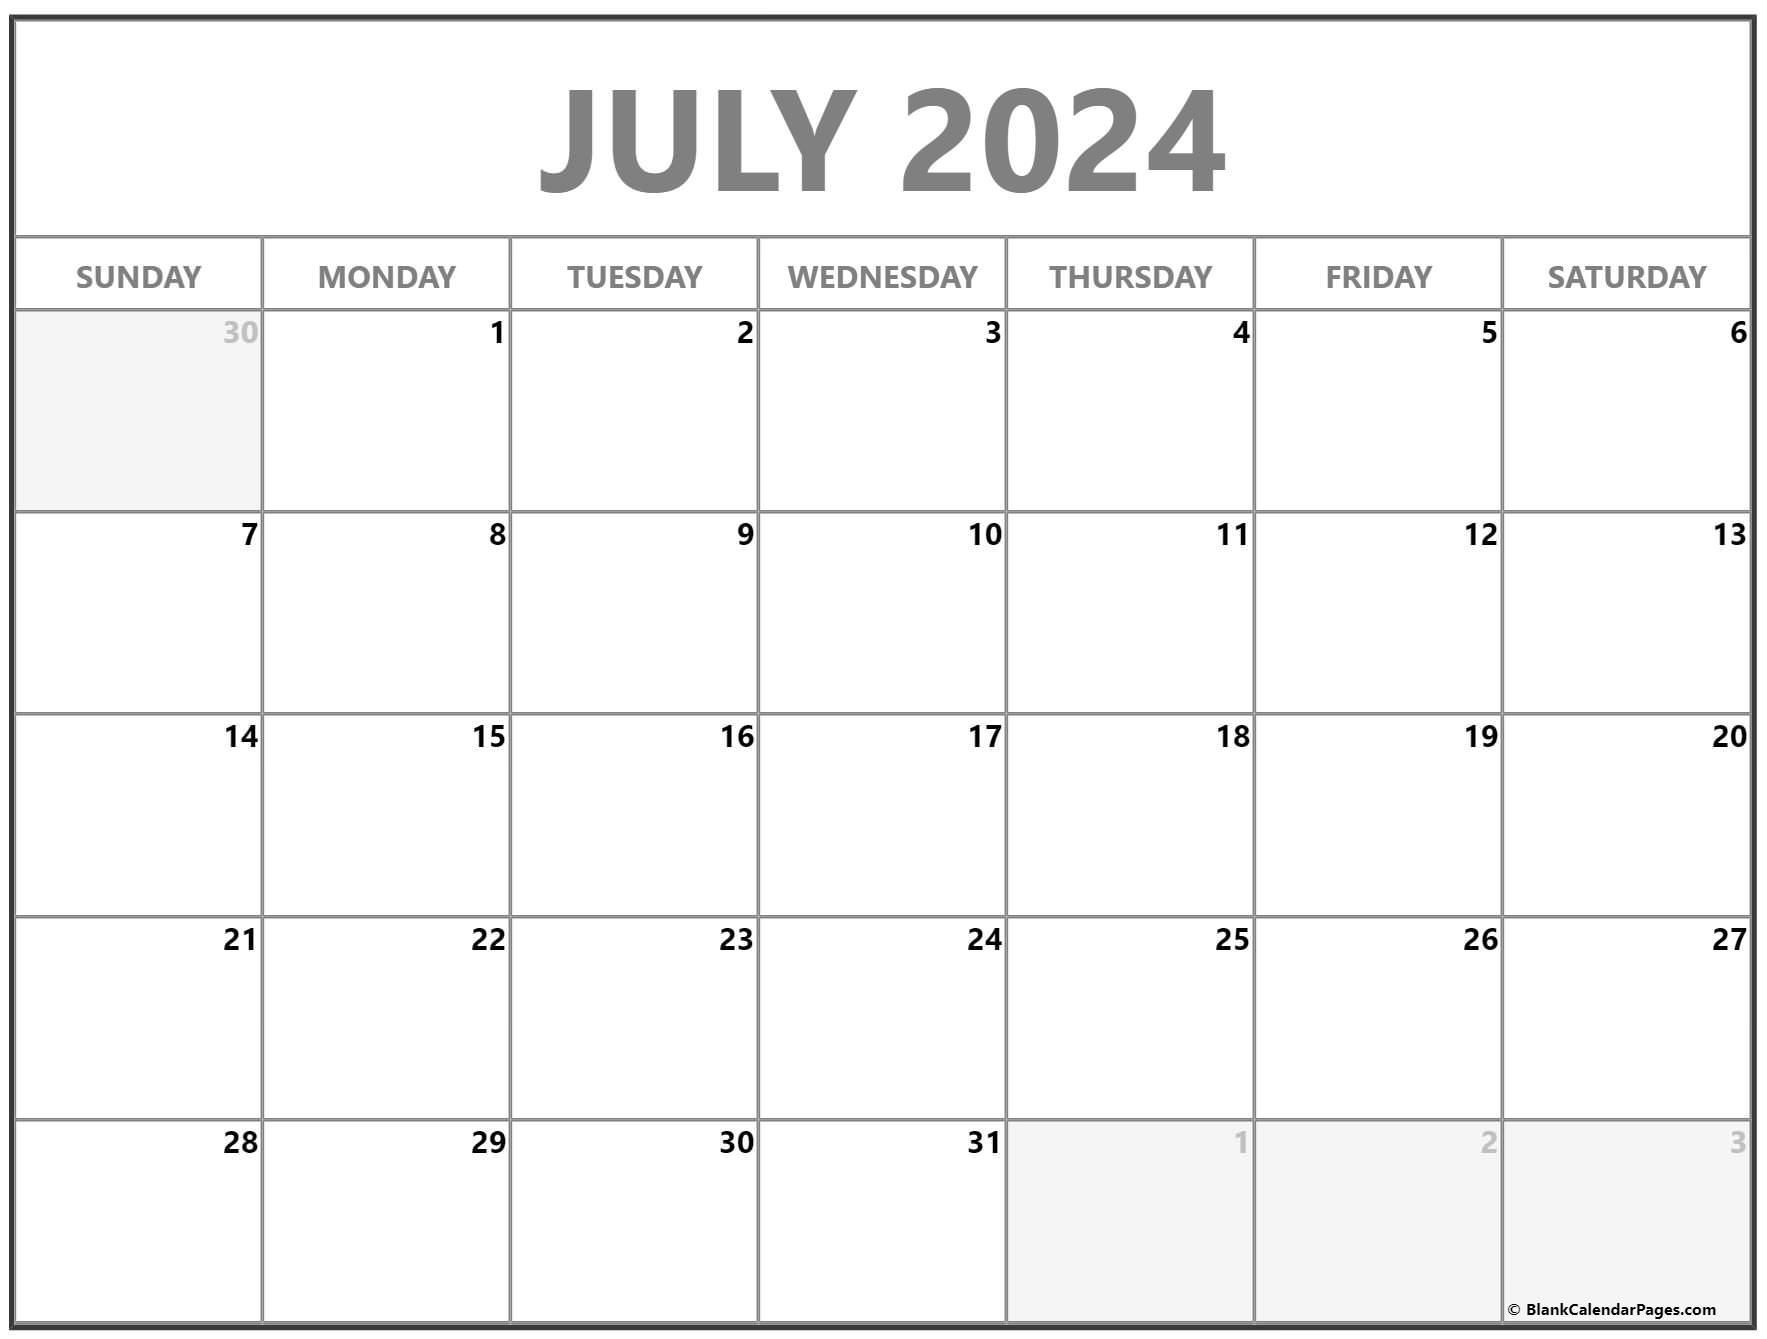 July 2024 Calendar | Free Printable Calendar | Show Calendar For July 2024